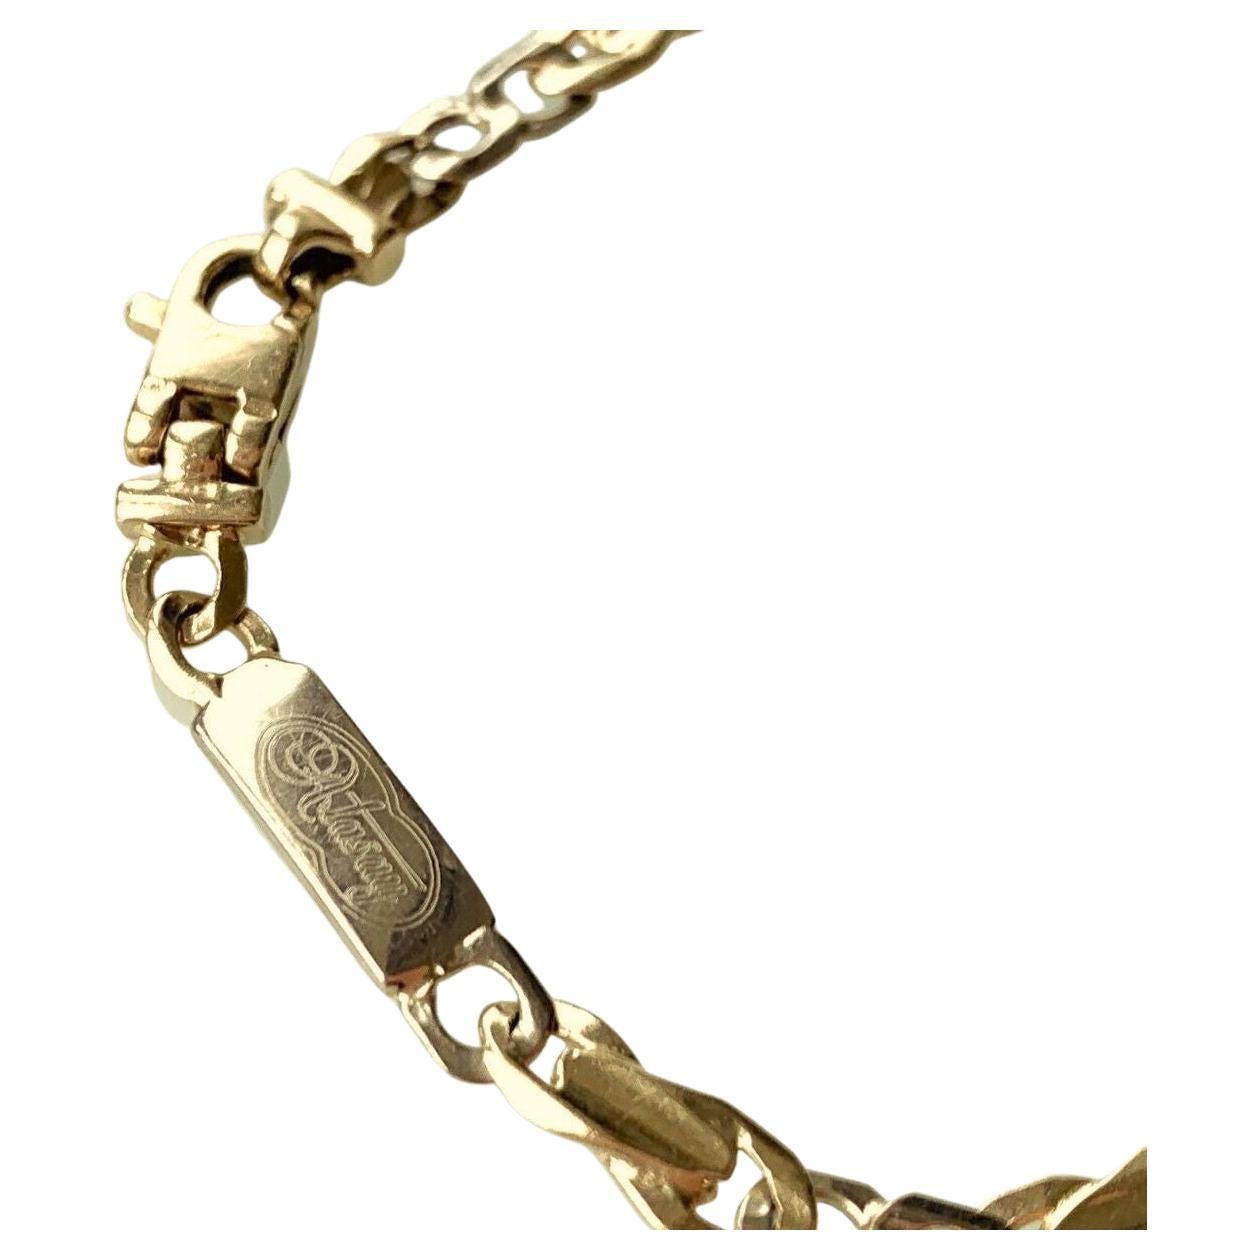 14ct 585 Bracelet by Goldsmiths Atasay